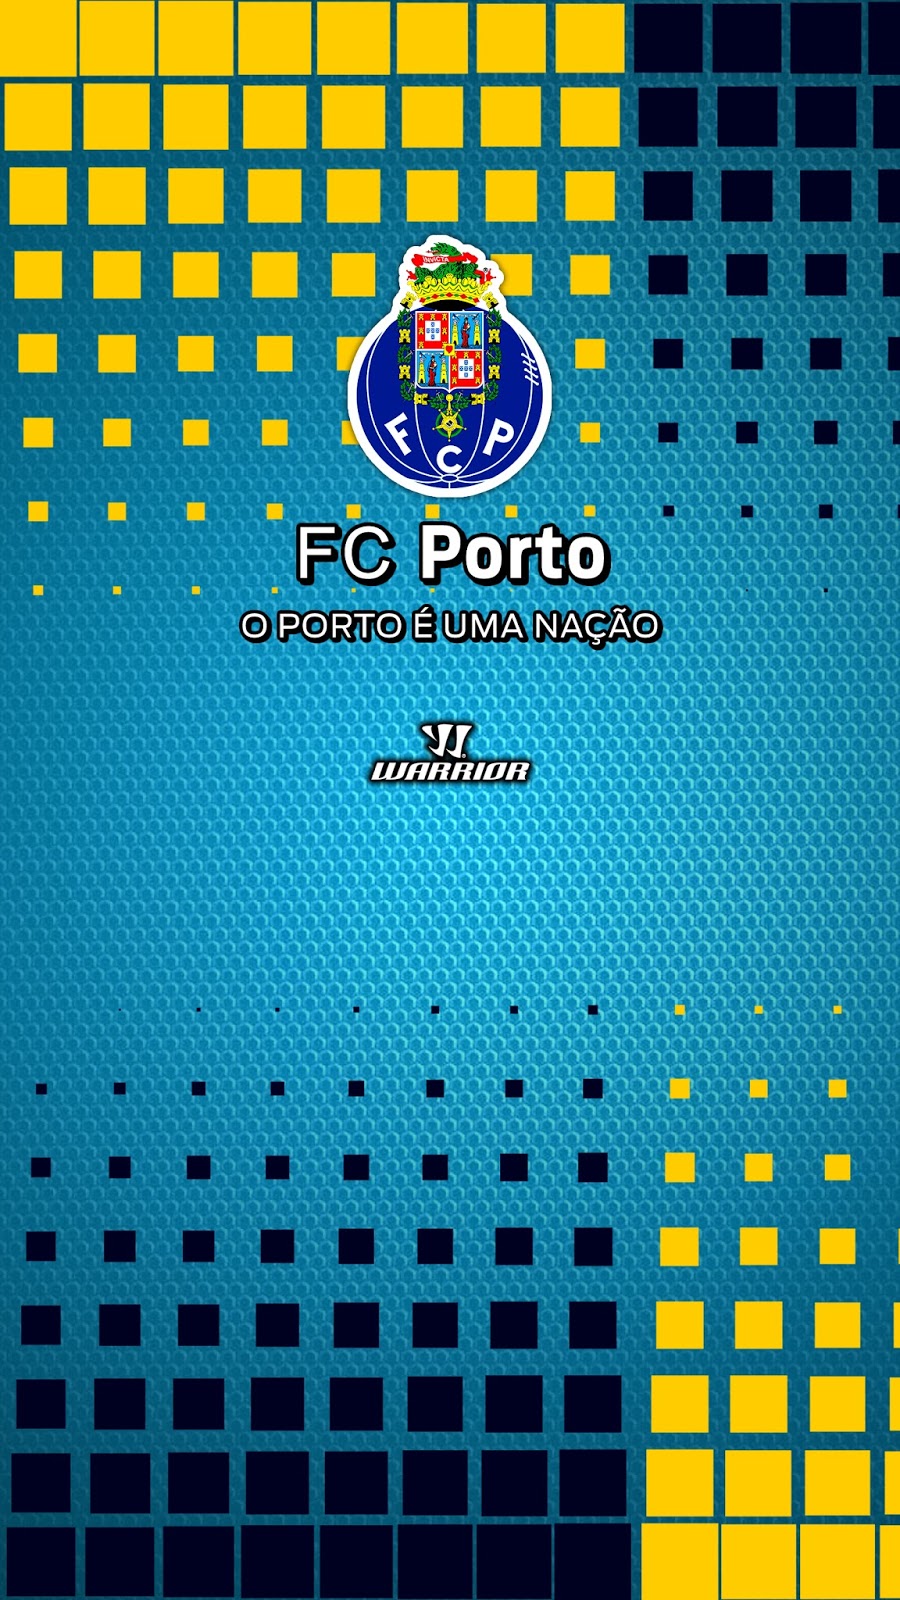 World Cup: IPhone Wallpaper FC Porto - Oct